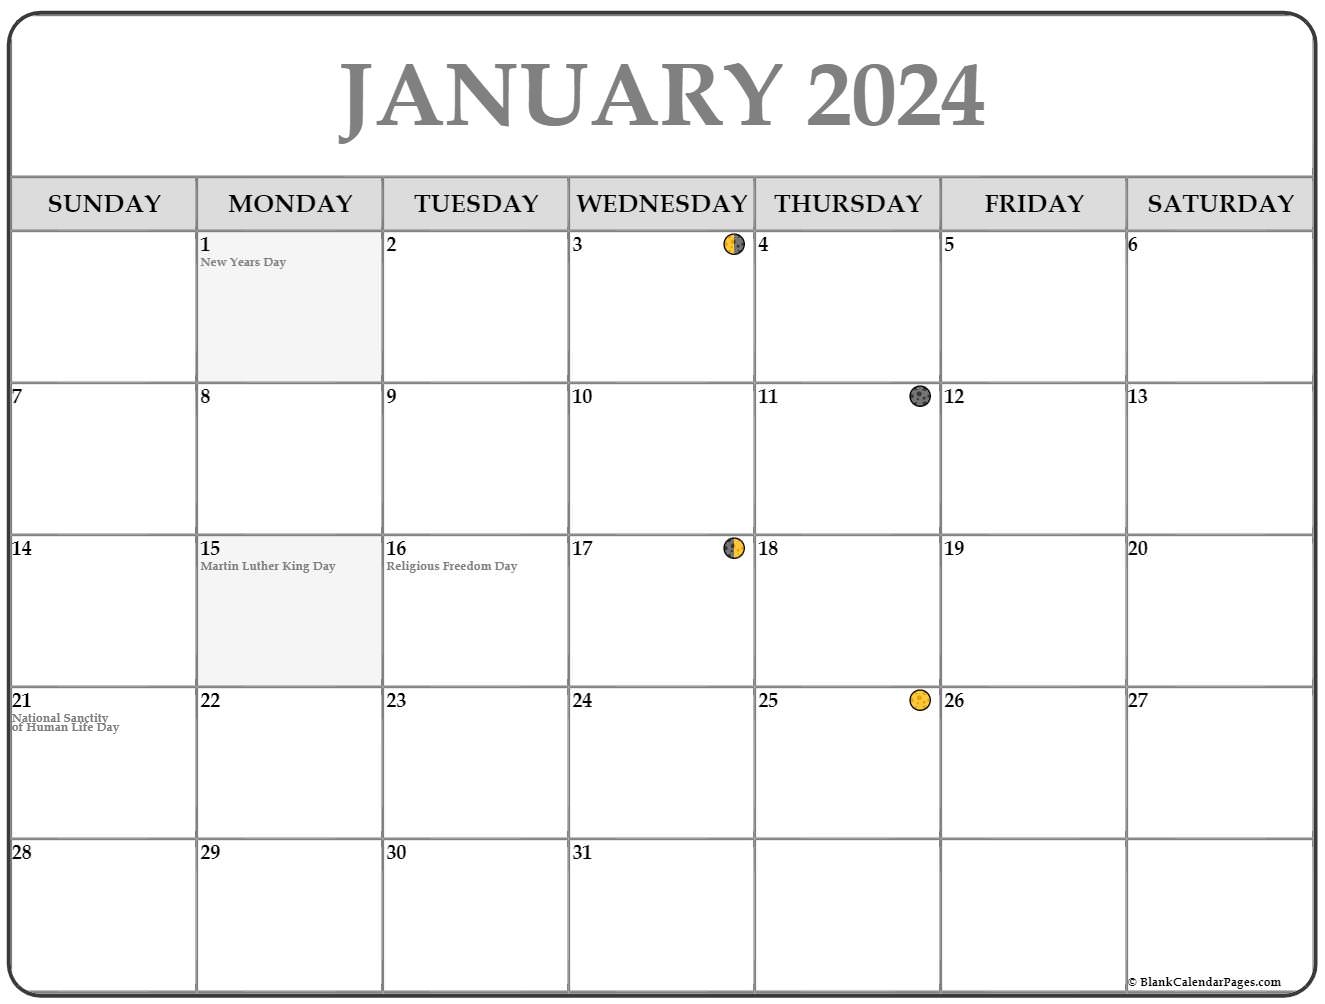 Moon Phases Lunar Calendar 2024 Calendar 2024 Ireland Printable - Free Printable 2024 Calendar With Moon Phases Cosmic Events